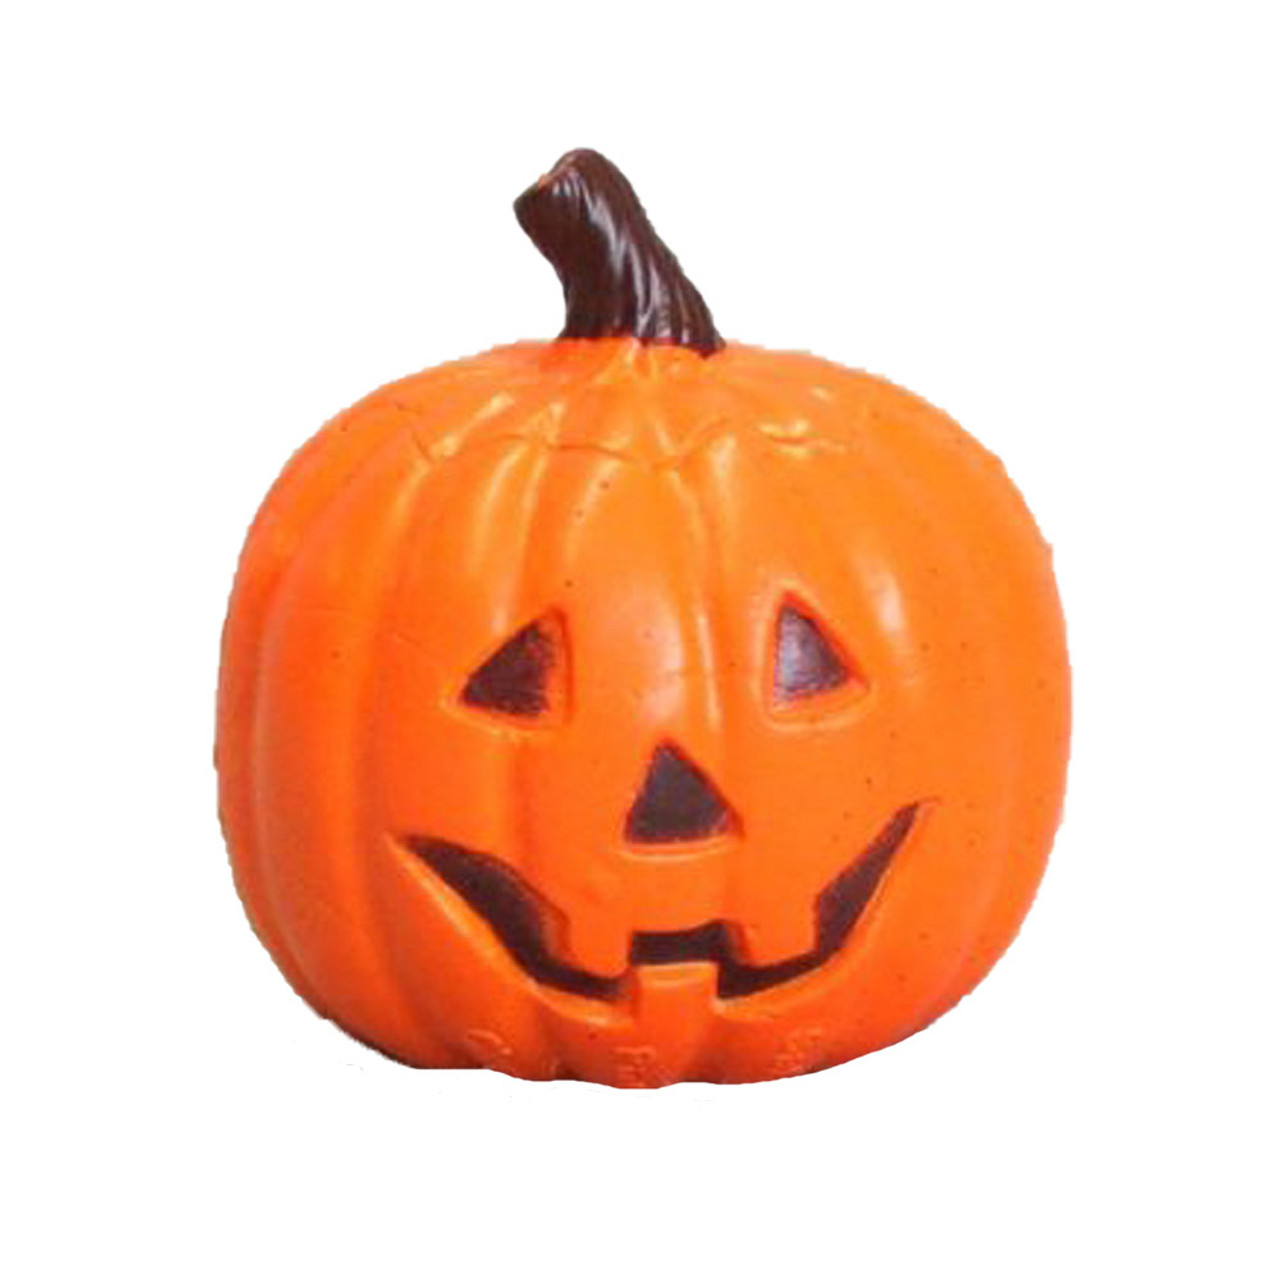 Plastic Pumpkin Jack-o'-lantern Halloween Decor 1 1/4 inches wide